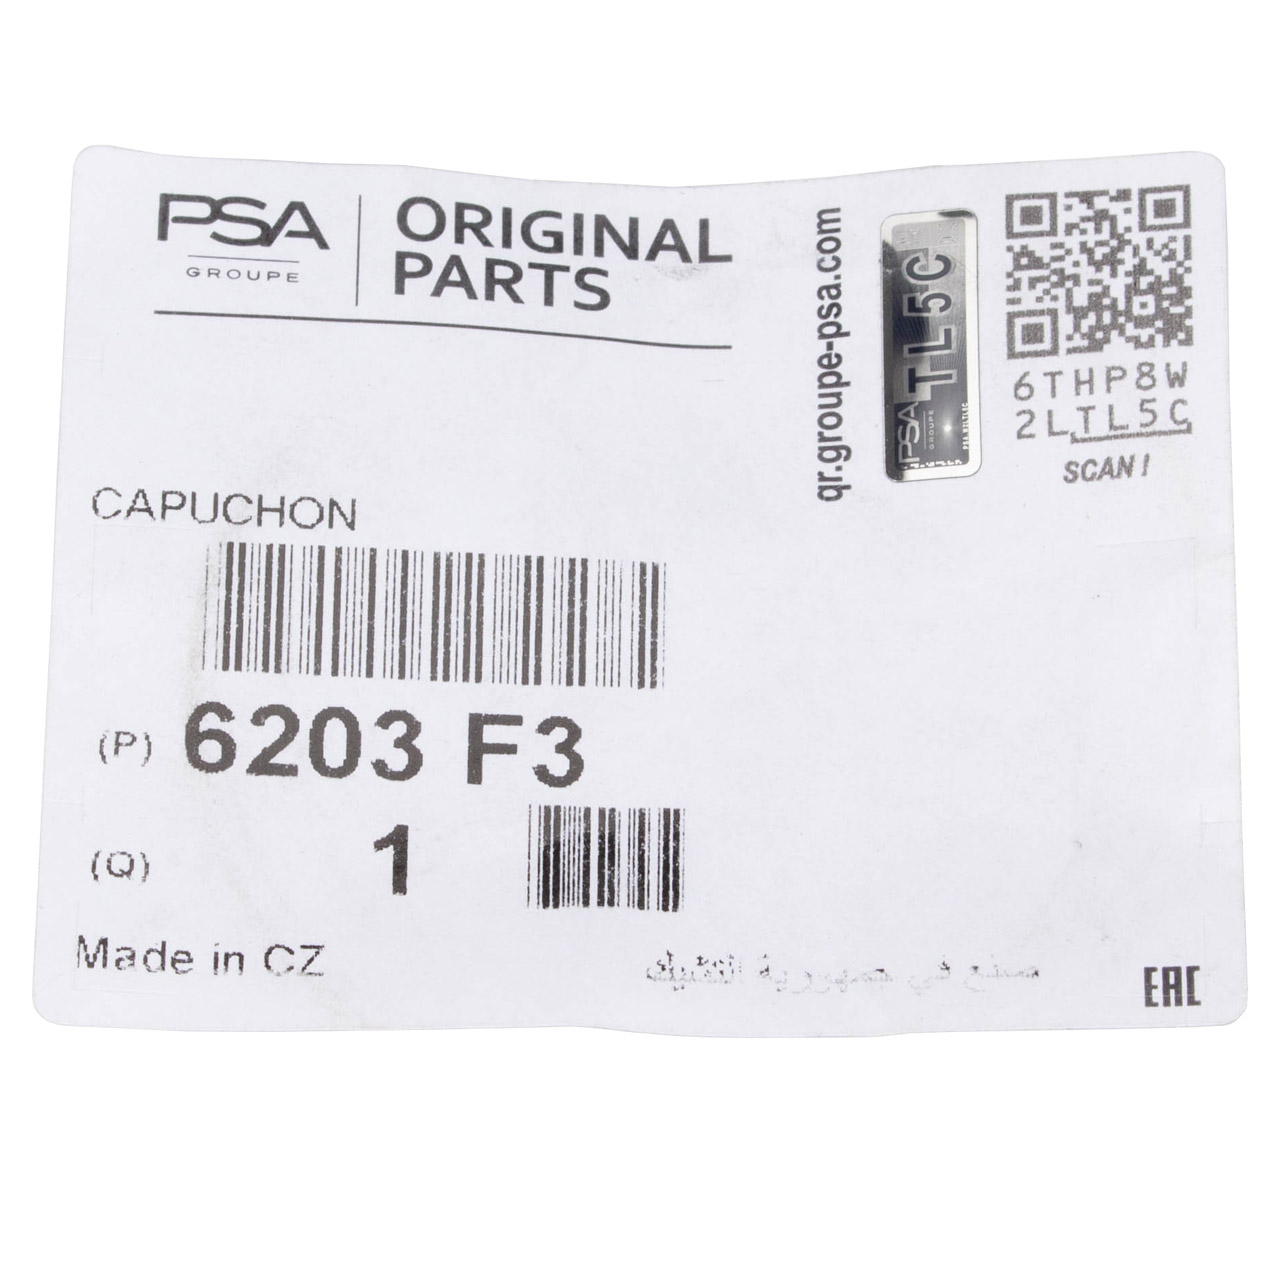 ORIGINAL PSA Citroen Abdeckung Verschlusskappe Scheinwerfer C3 2 DS3 DS5 6203.F3